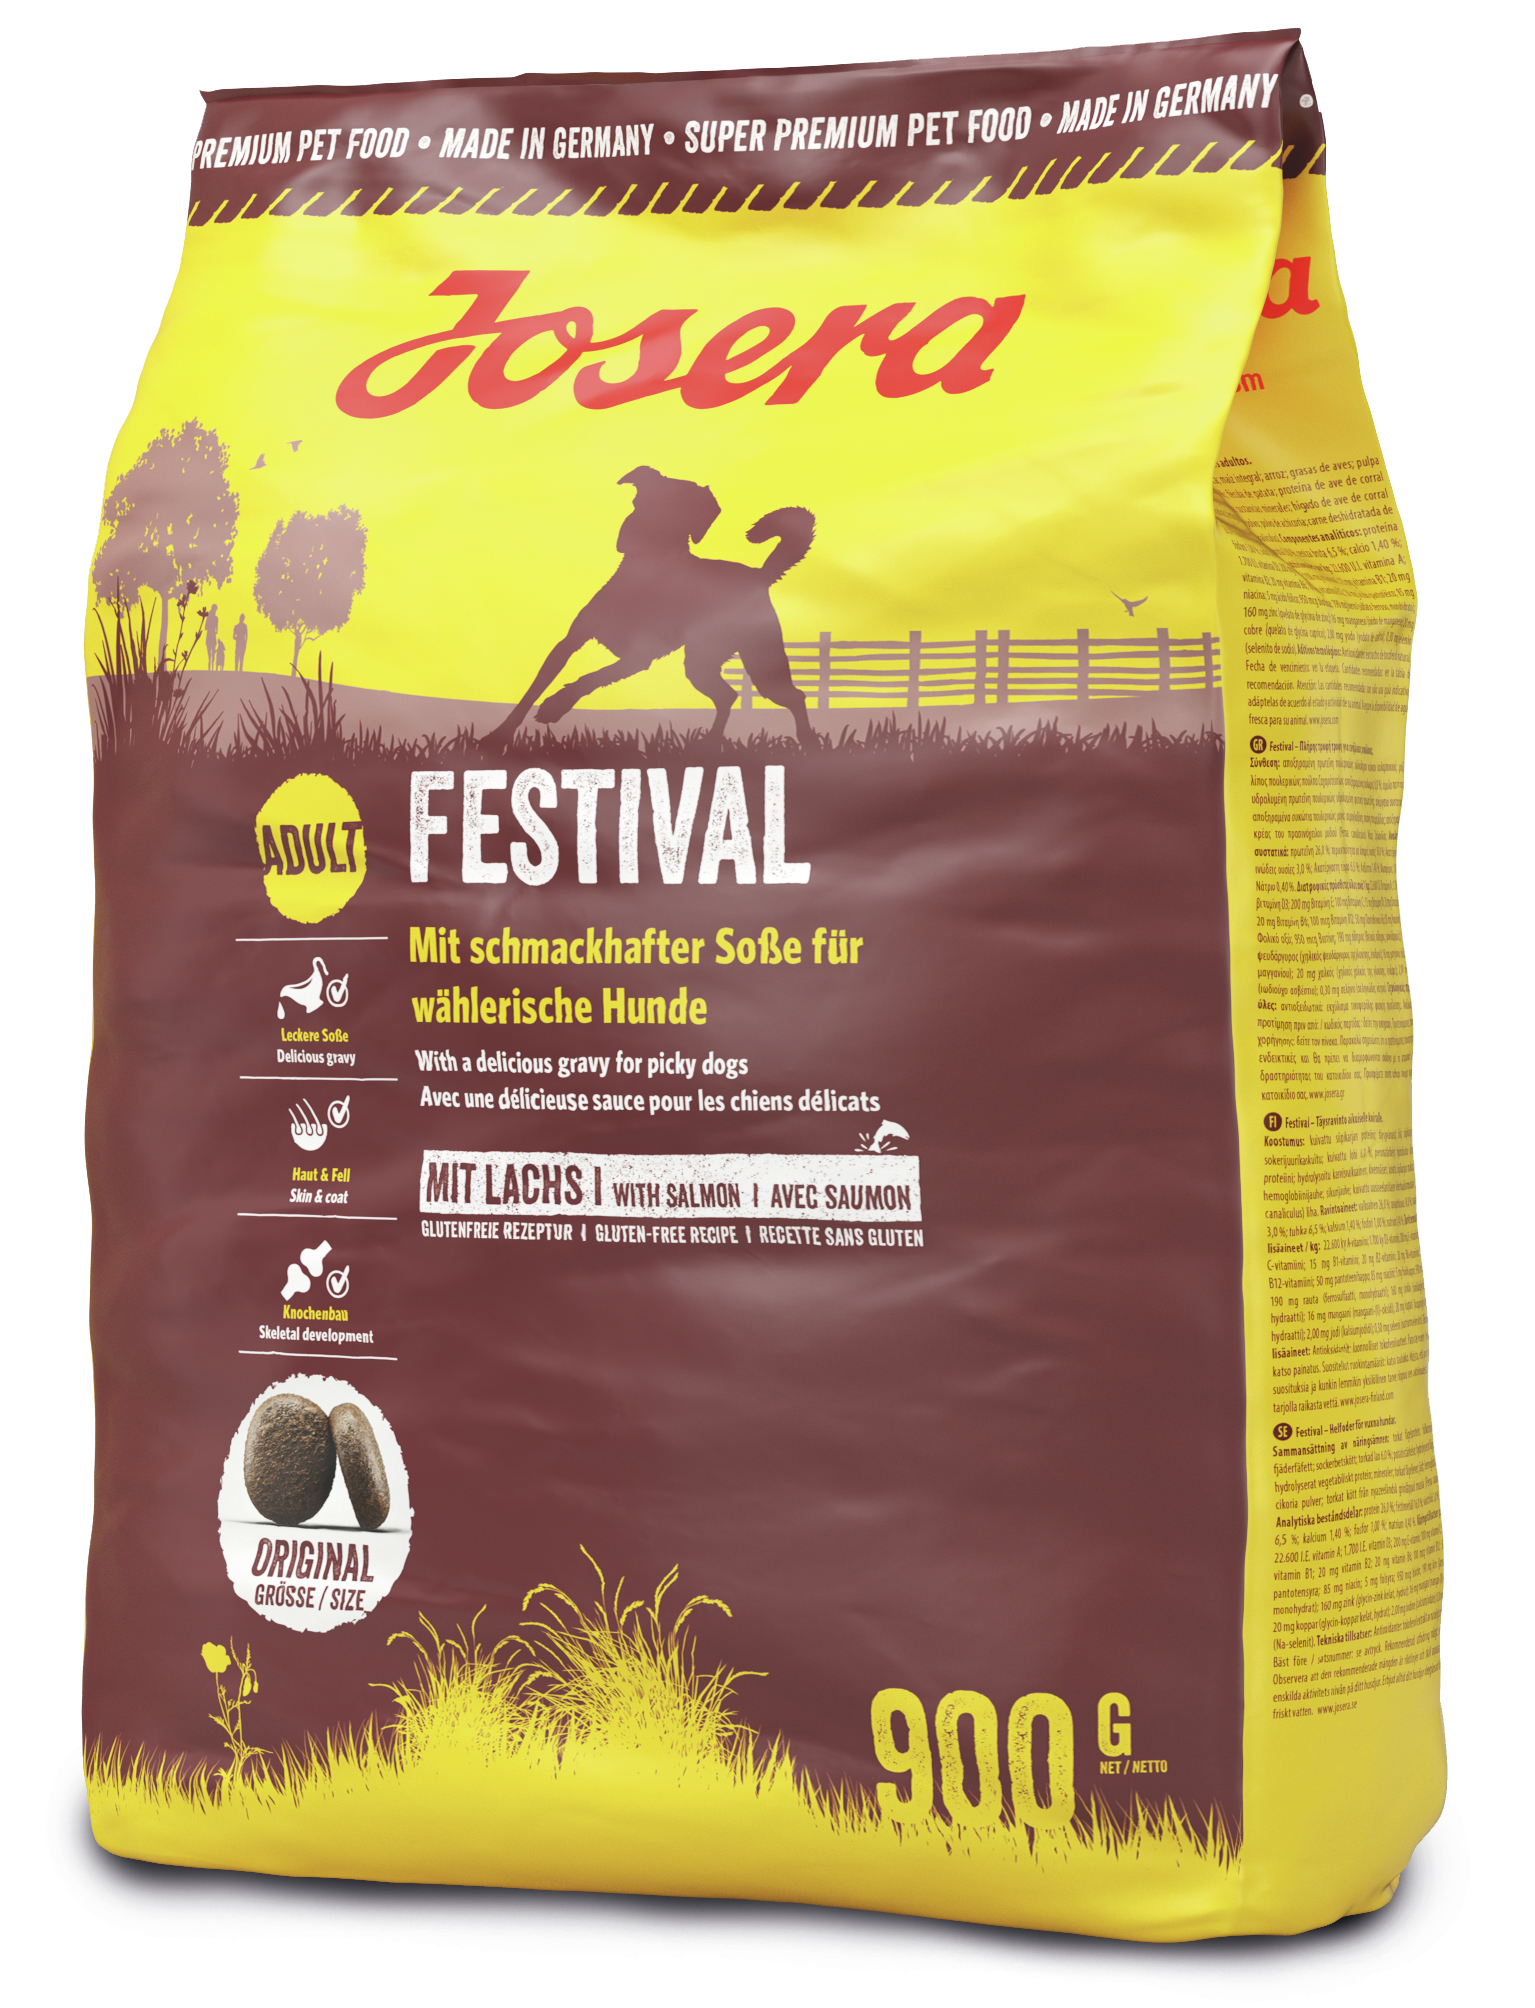 GRUNER Josera Festival 900g Hundefutter Super Premium - KEINE DISPO